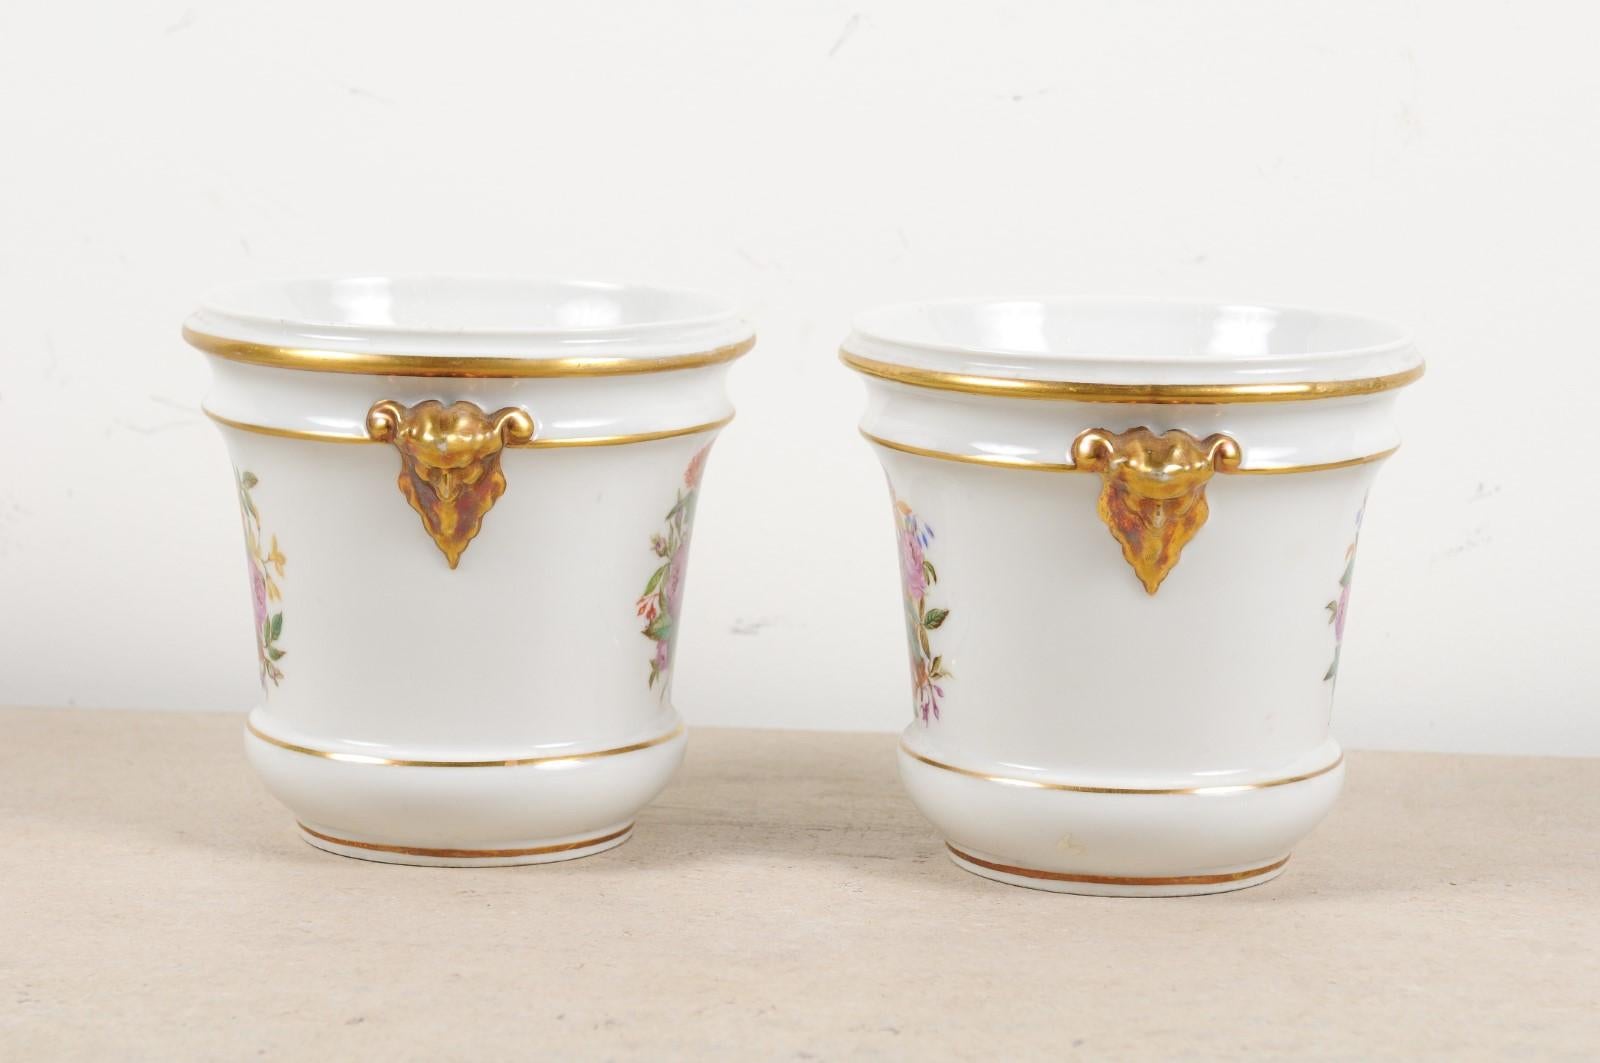 Pair of French Late 18th Century Paris Porcelain Cachepots with Floral Décor For Sale 11